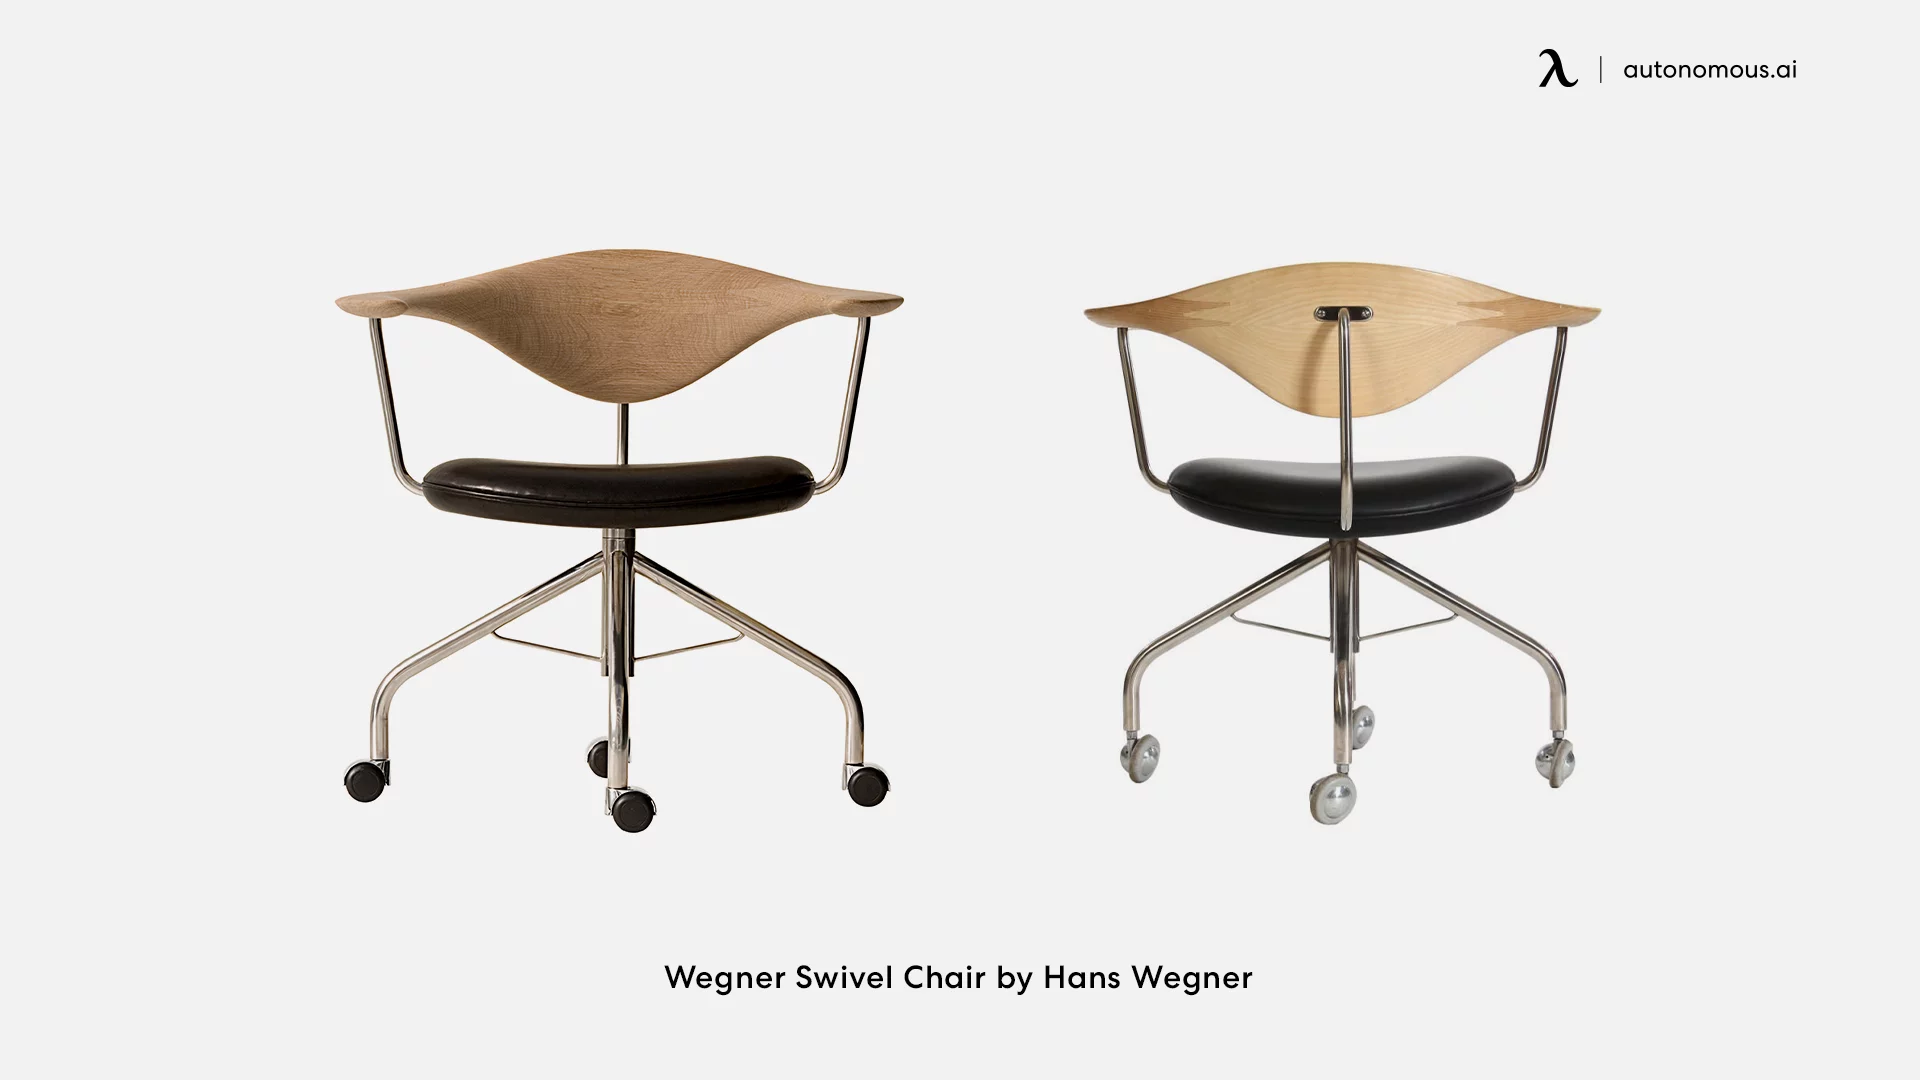 Wegner Swivel Chair expensive office chair